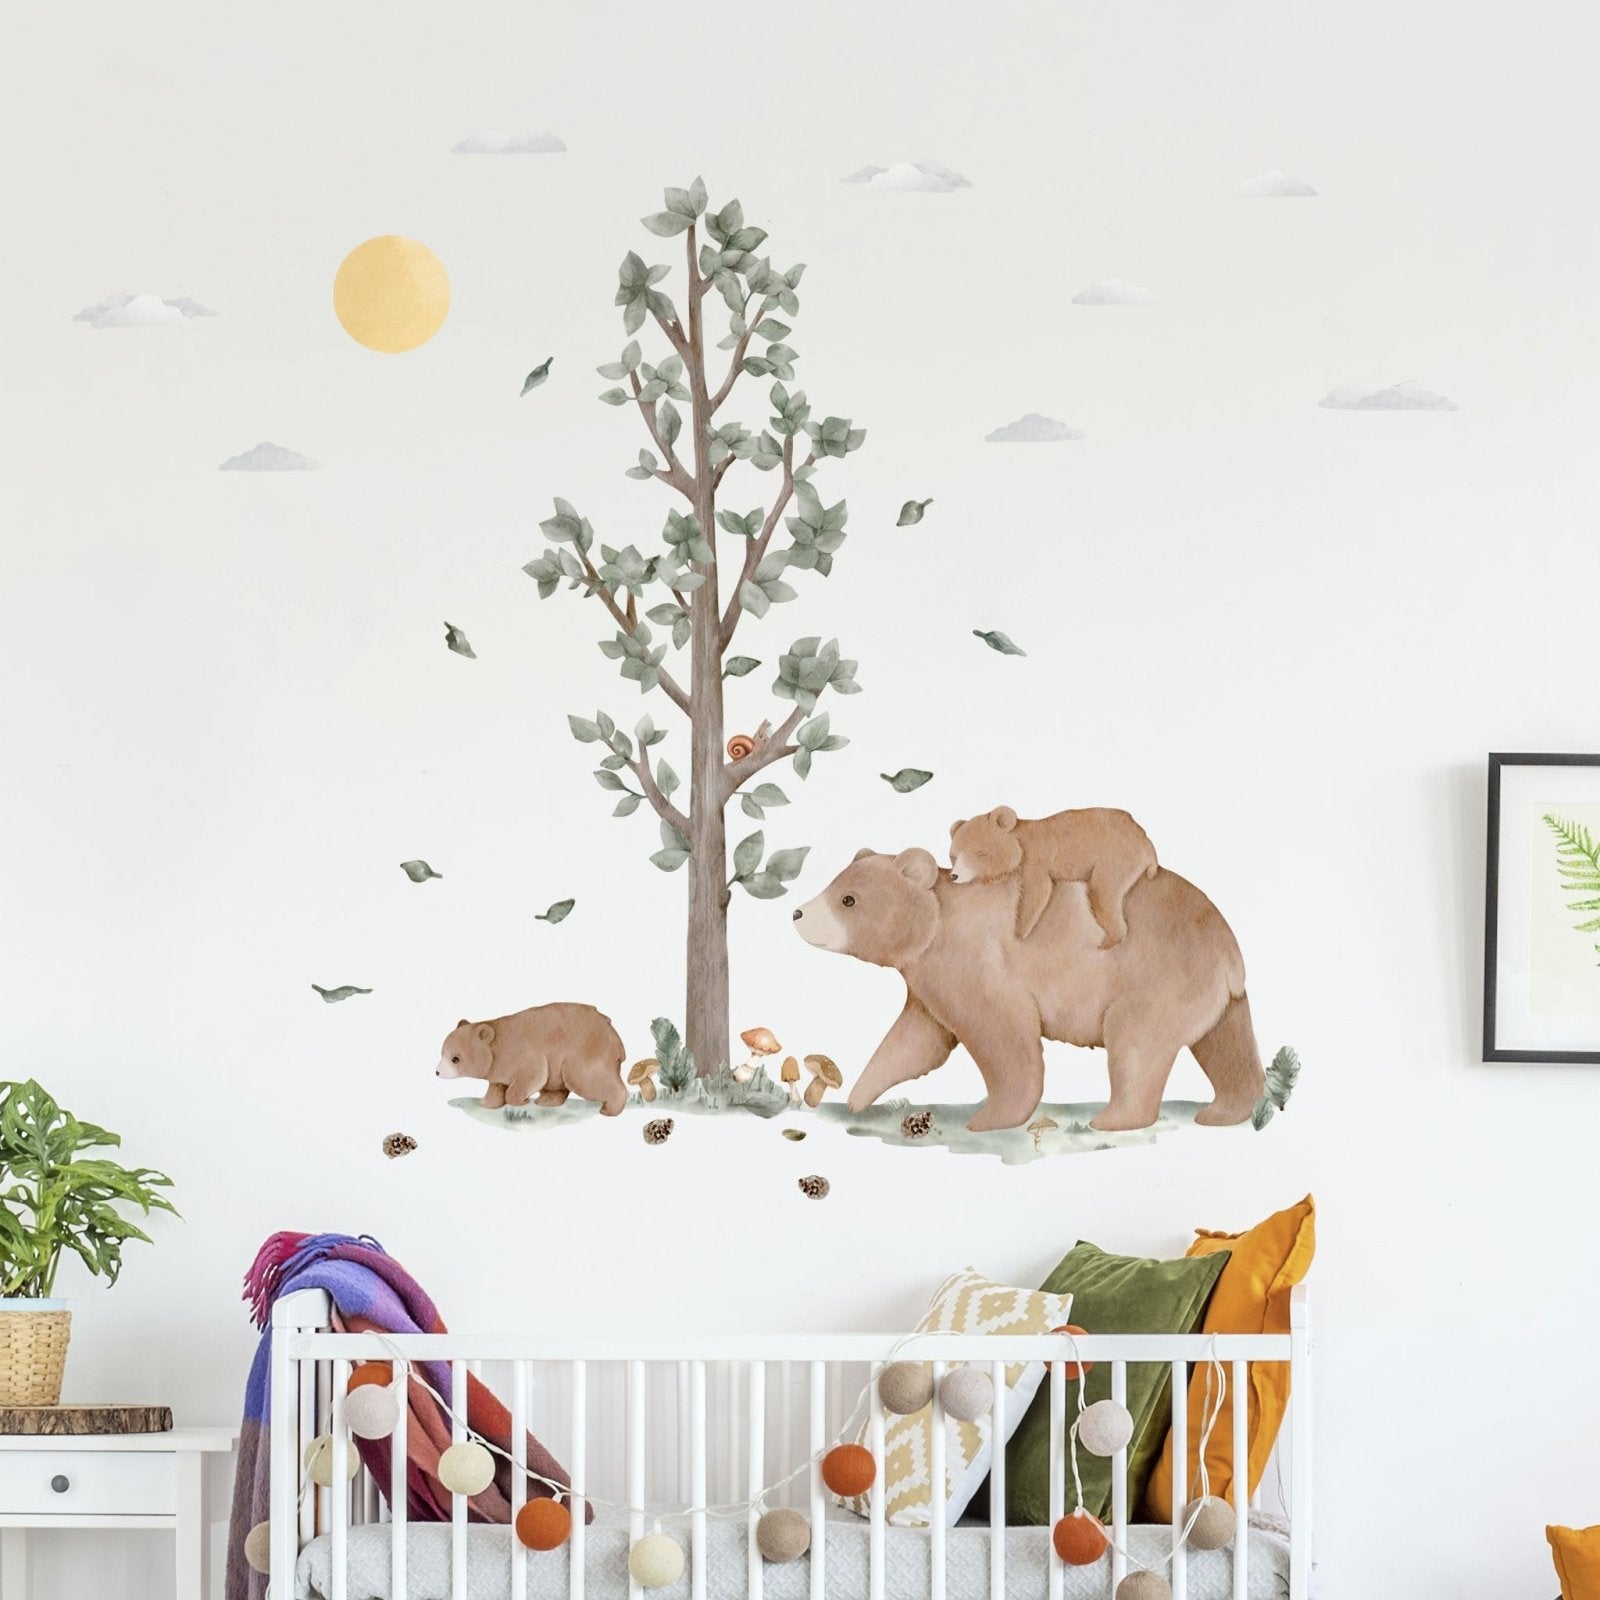 Family　Stickers:　Made　Bear　Fun　Cute!　Wall　of　Easy,　Peel　—　Stick　Sundays